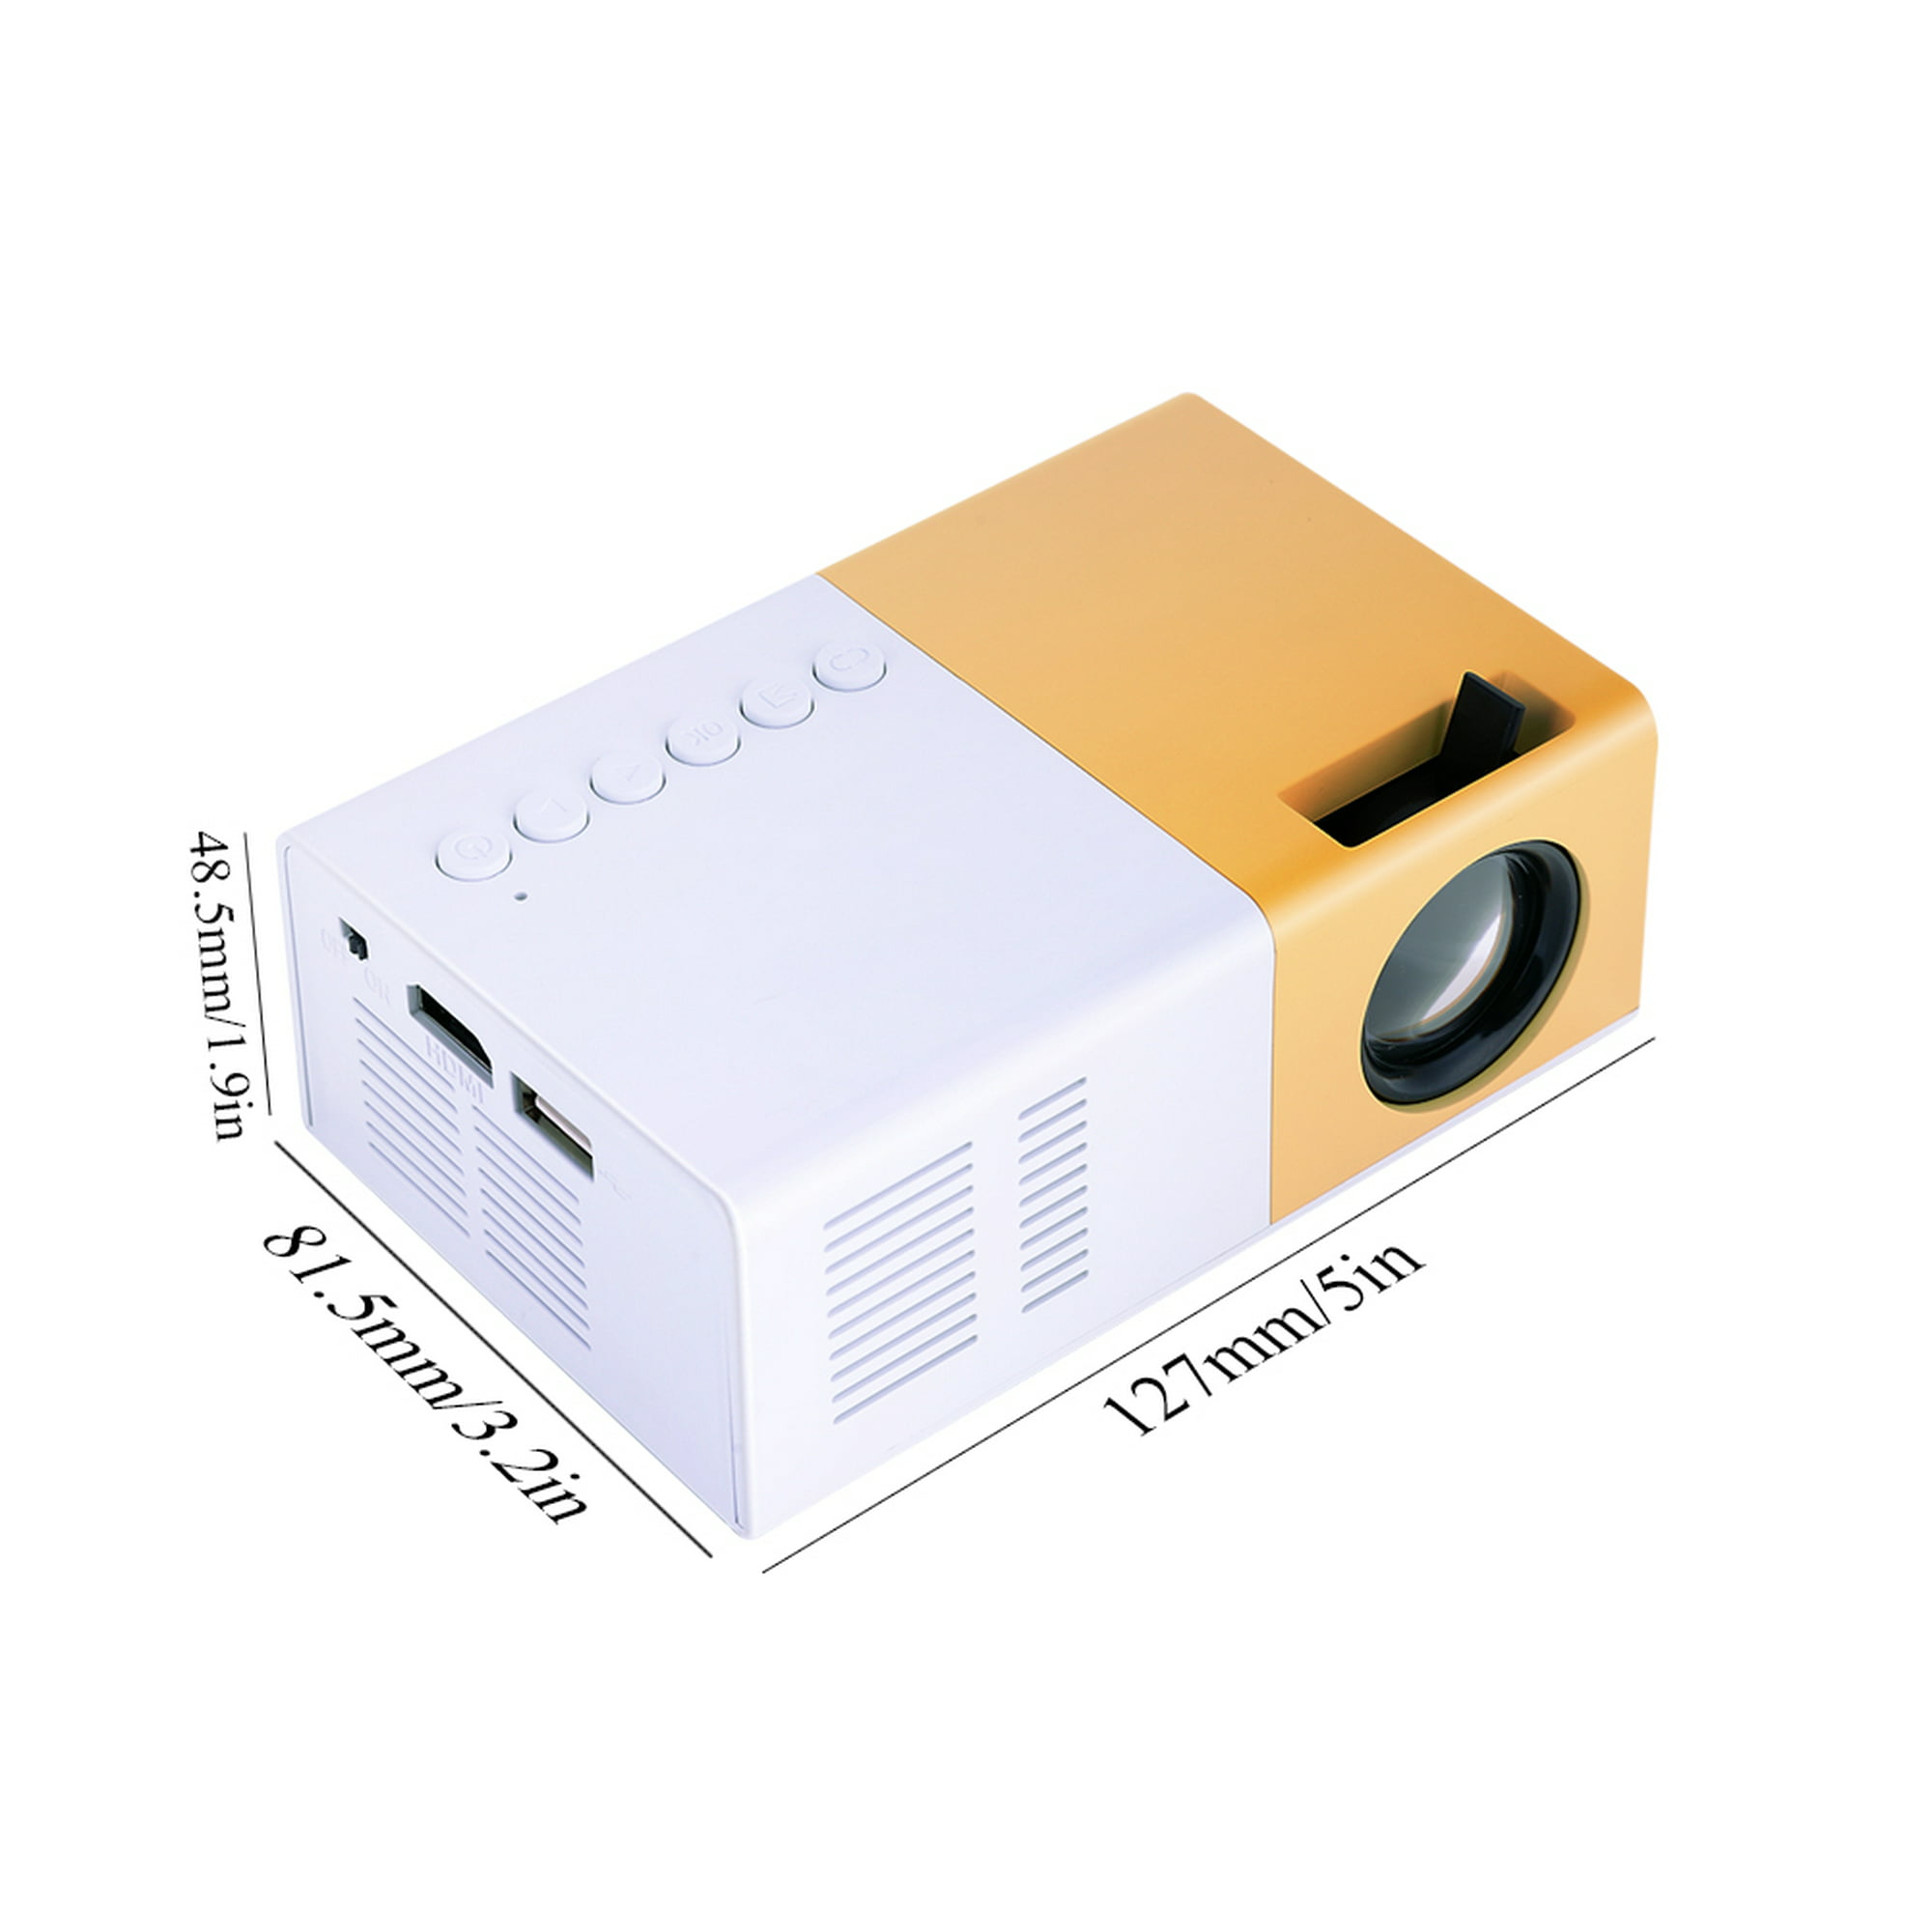  Mini proyectores portátiles LED micro proyector 1080P